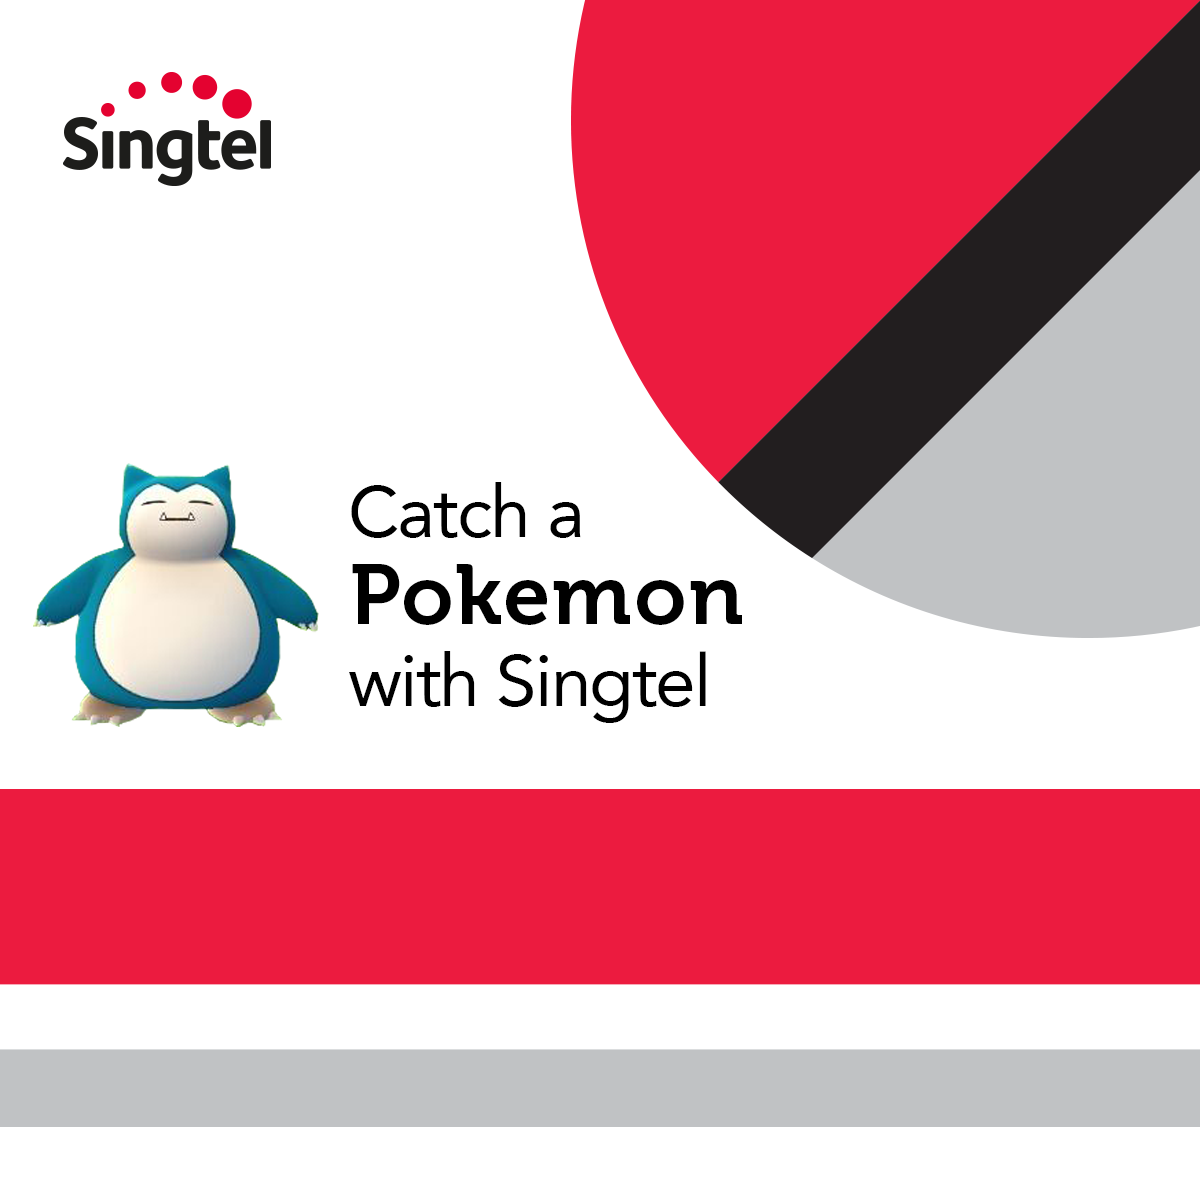 Singtel Catch a Pokemon with Lures at Singtel Shops Singapore Promotion 11 to 14 Aug 2016